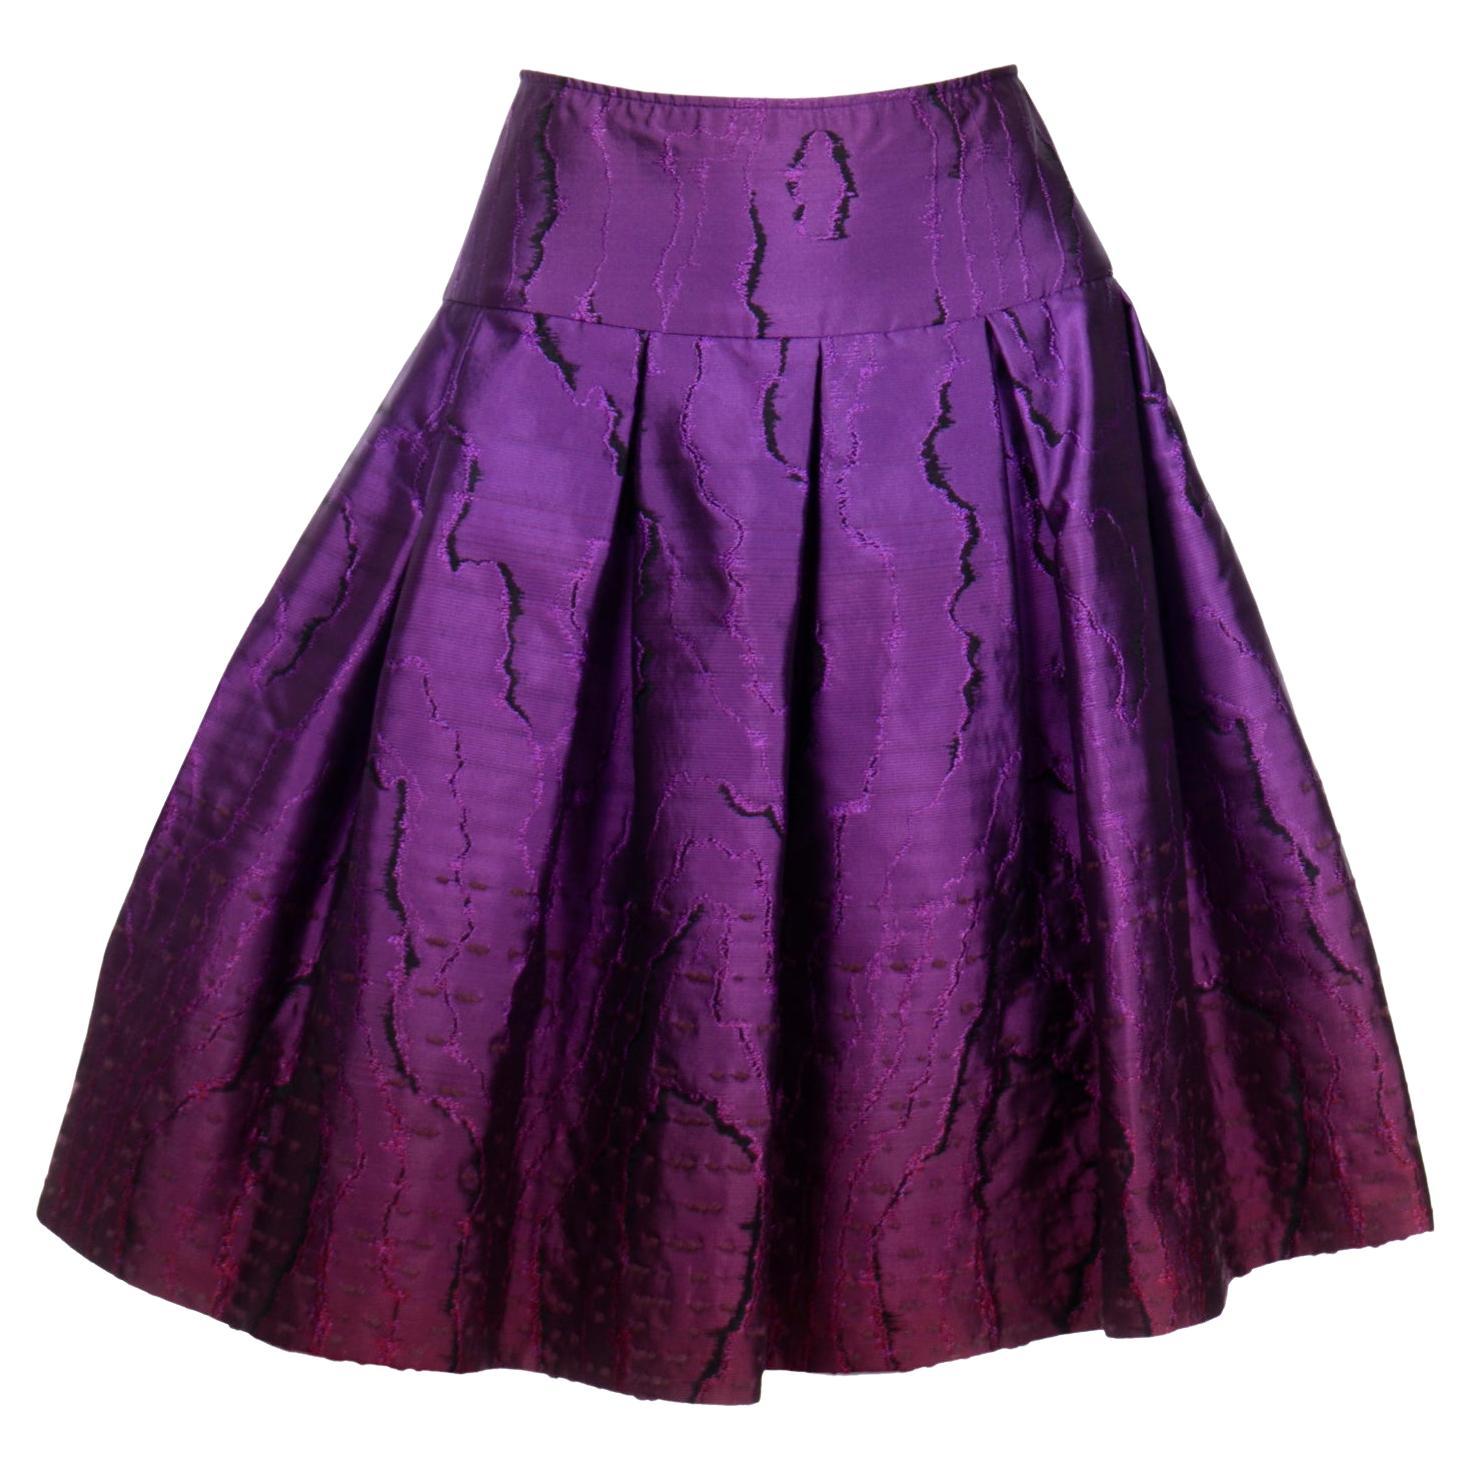 Oscar de la Renta Fall 2008 Purple Textured Skirt Runway Documented For Sale